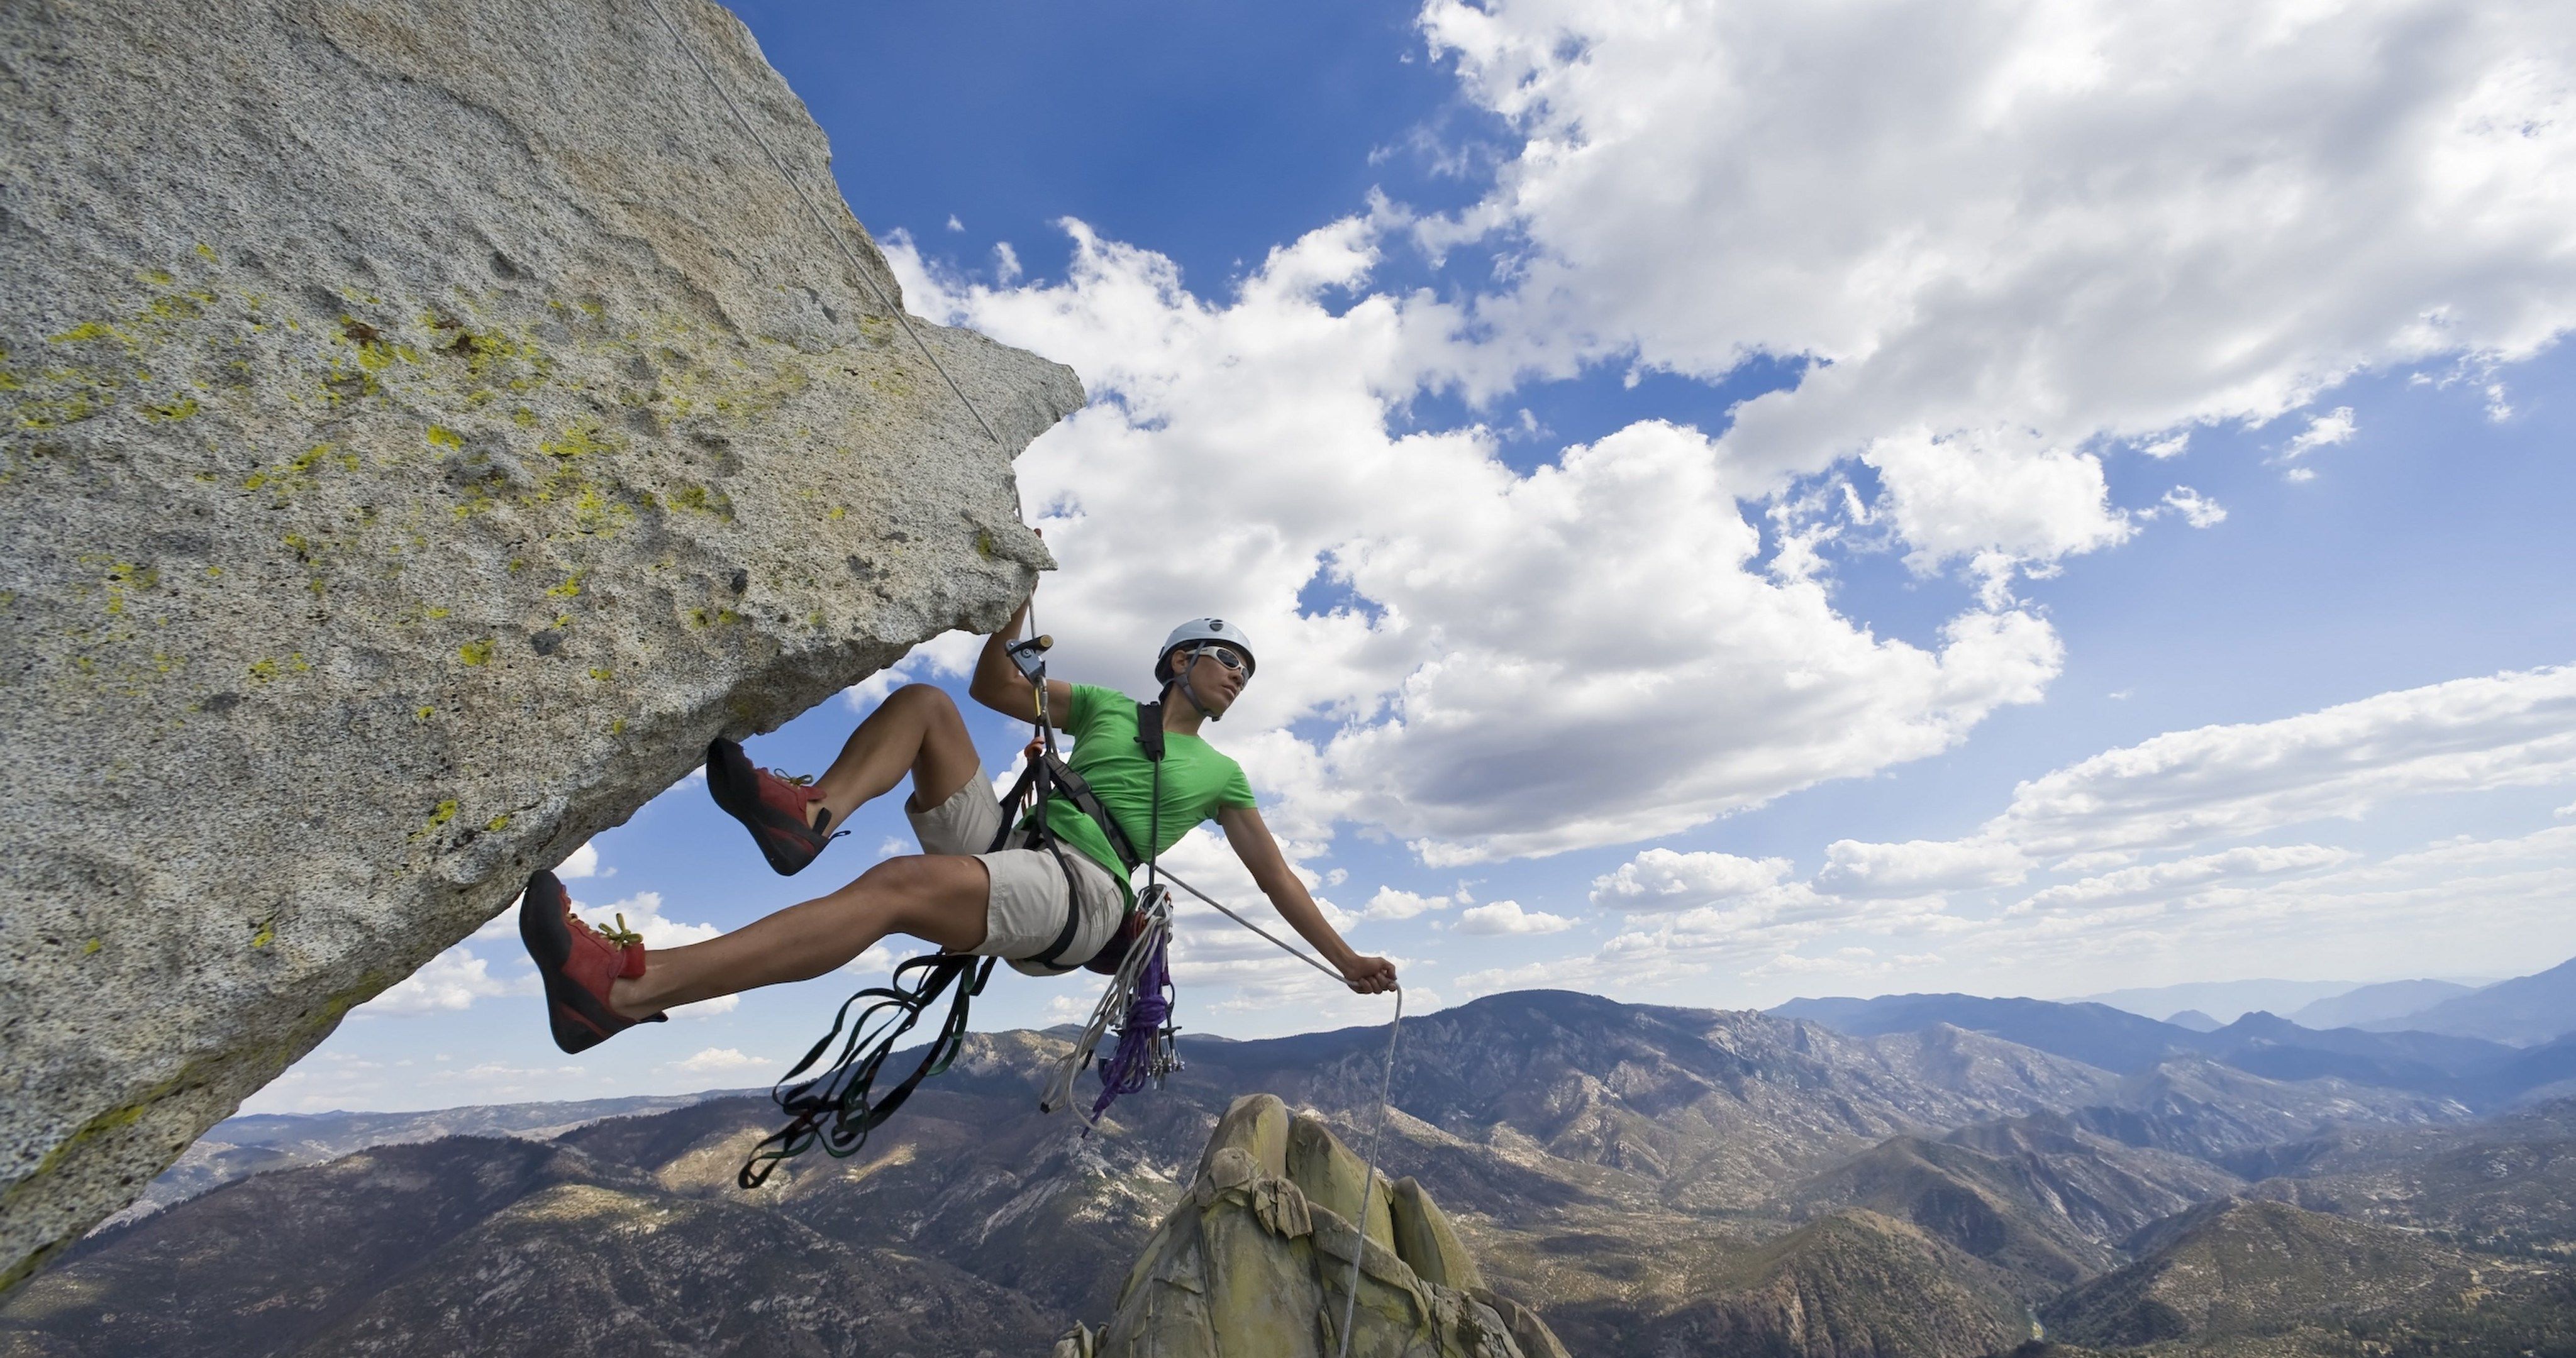 extreme sport rock climbing 4k ultra HD wallpaper High quality walls